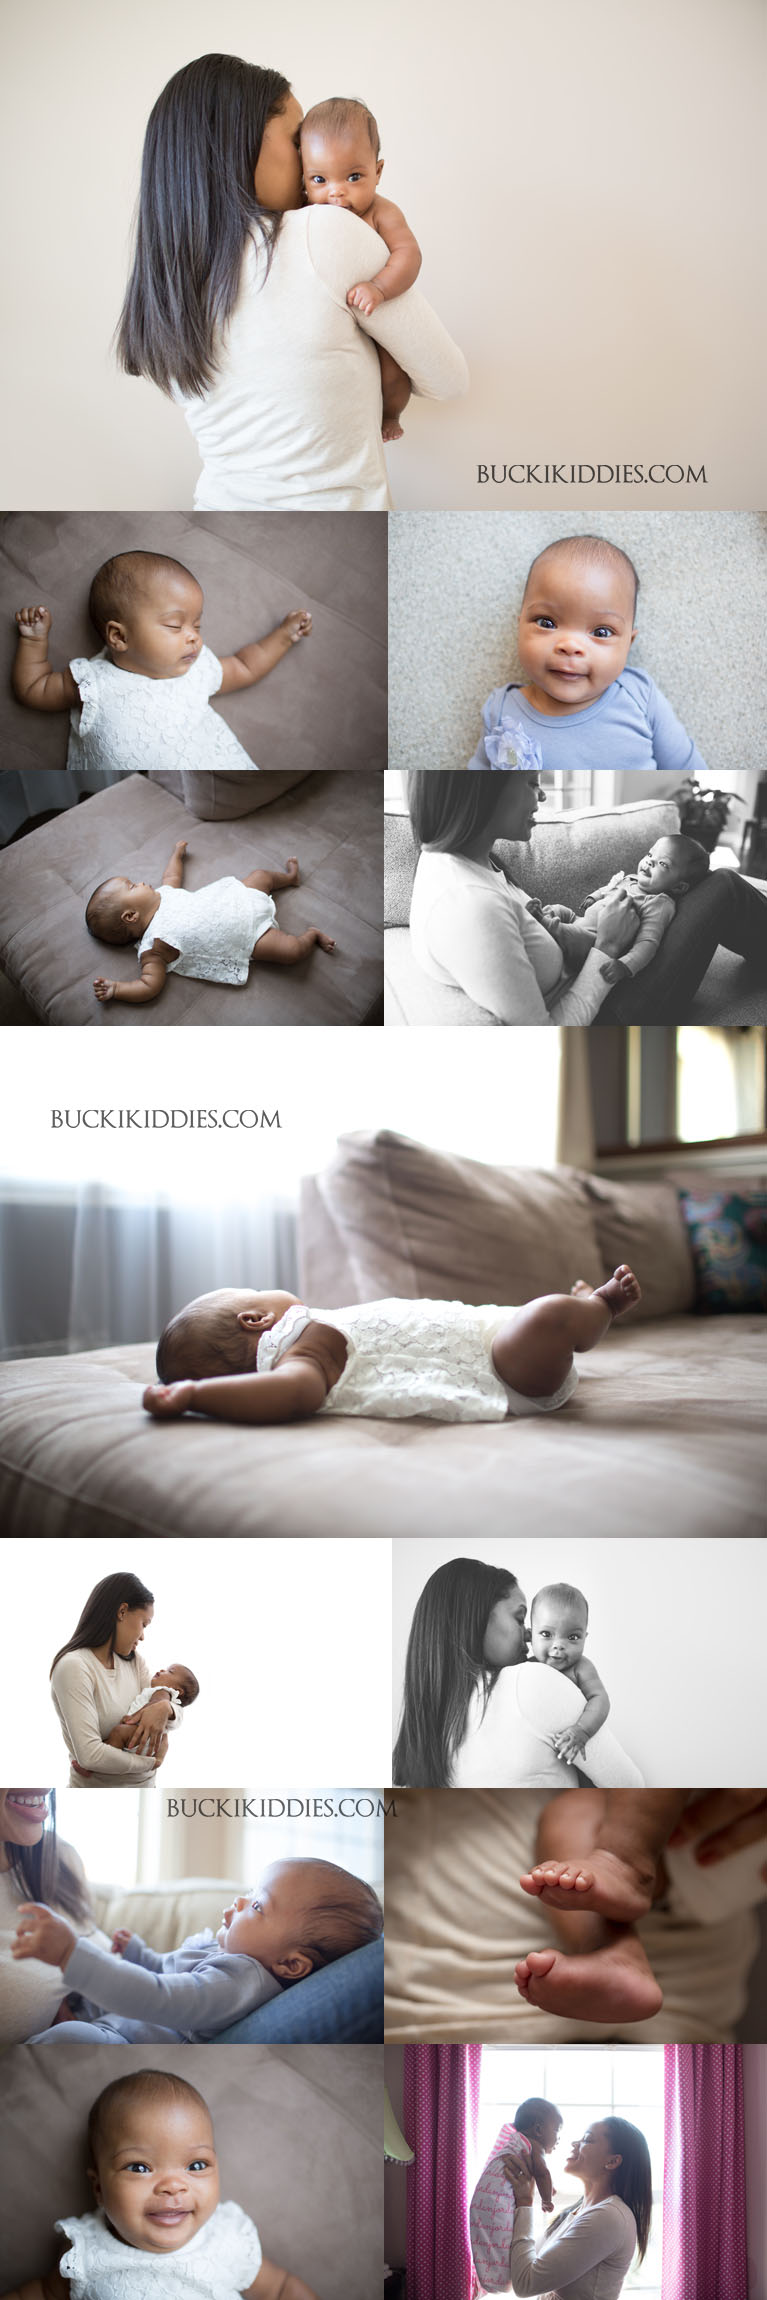 Lifestyle Newborn Session Buckikiddies Photography Ohio